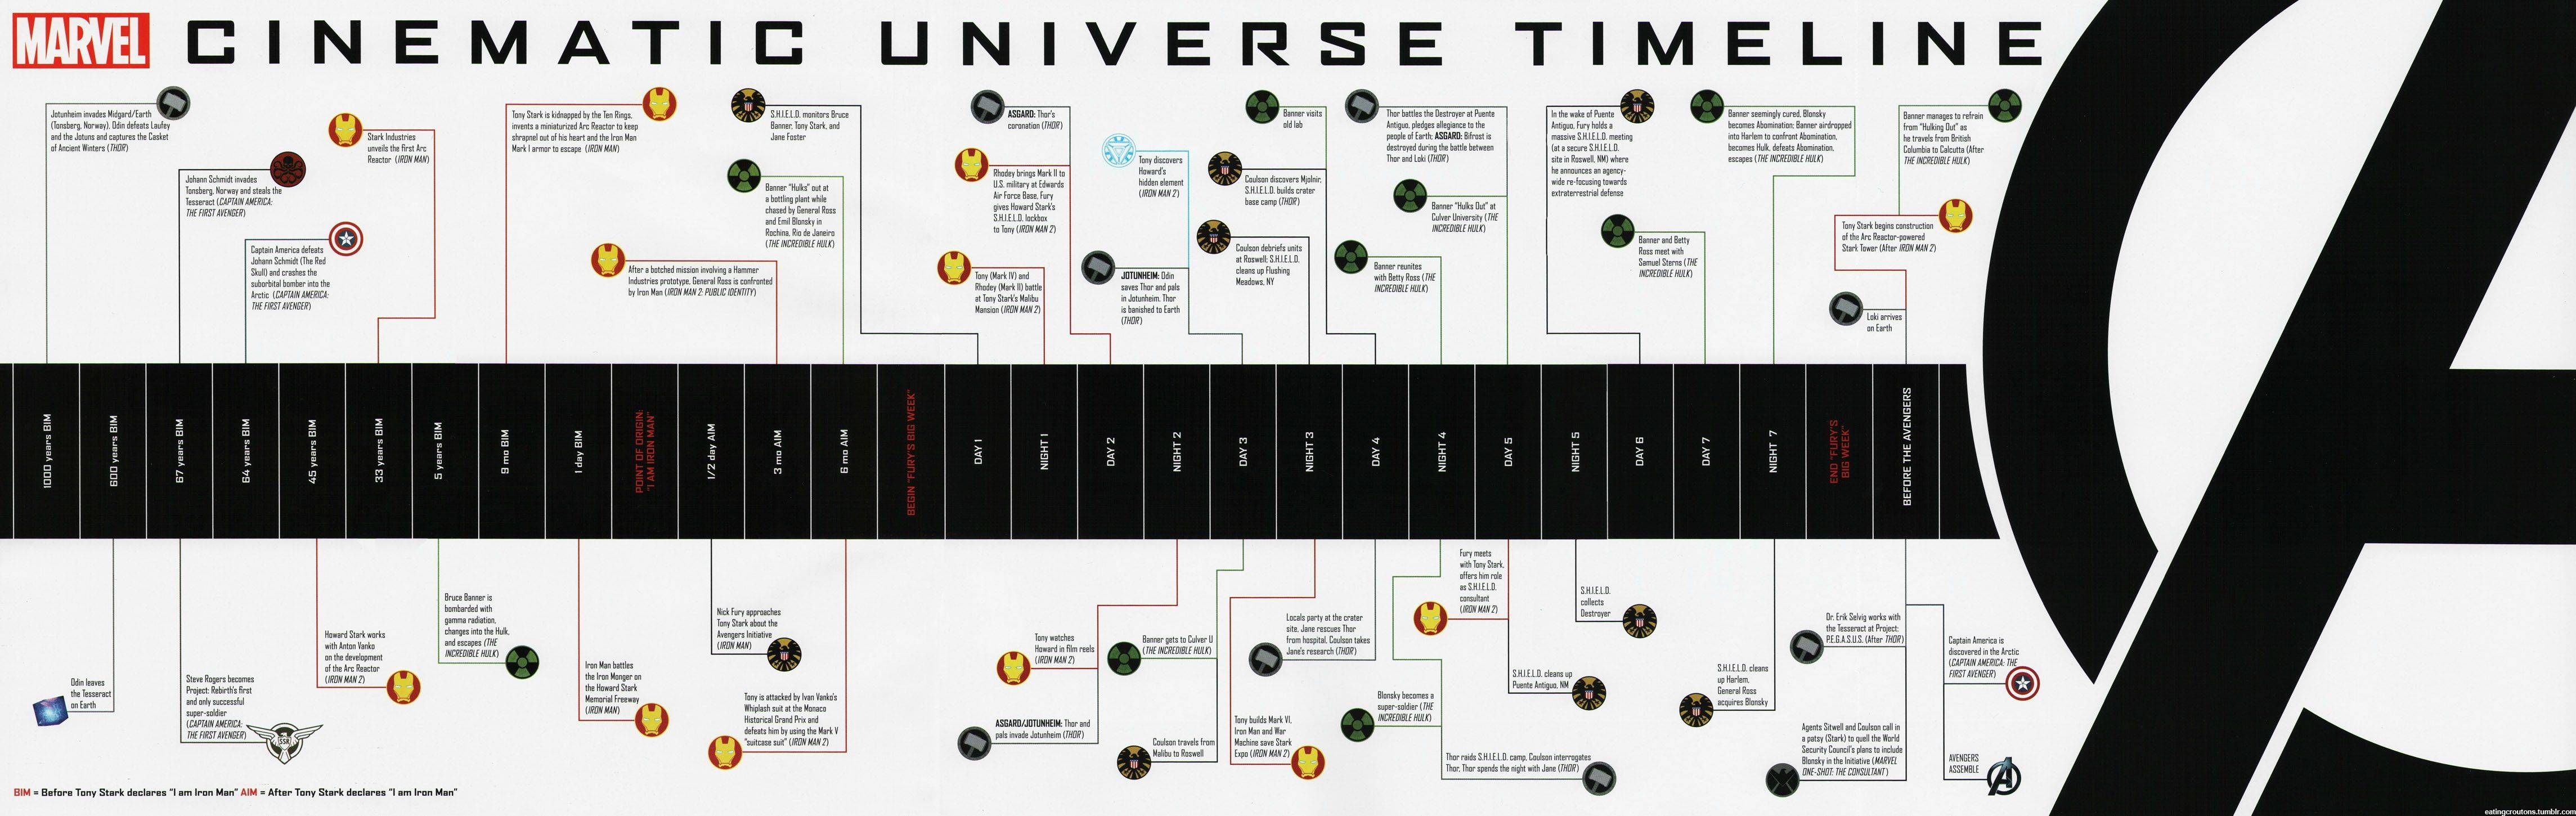 Marvel's The Avengers Movie Timeline Infographic